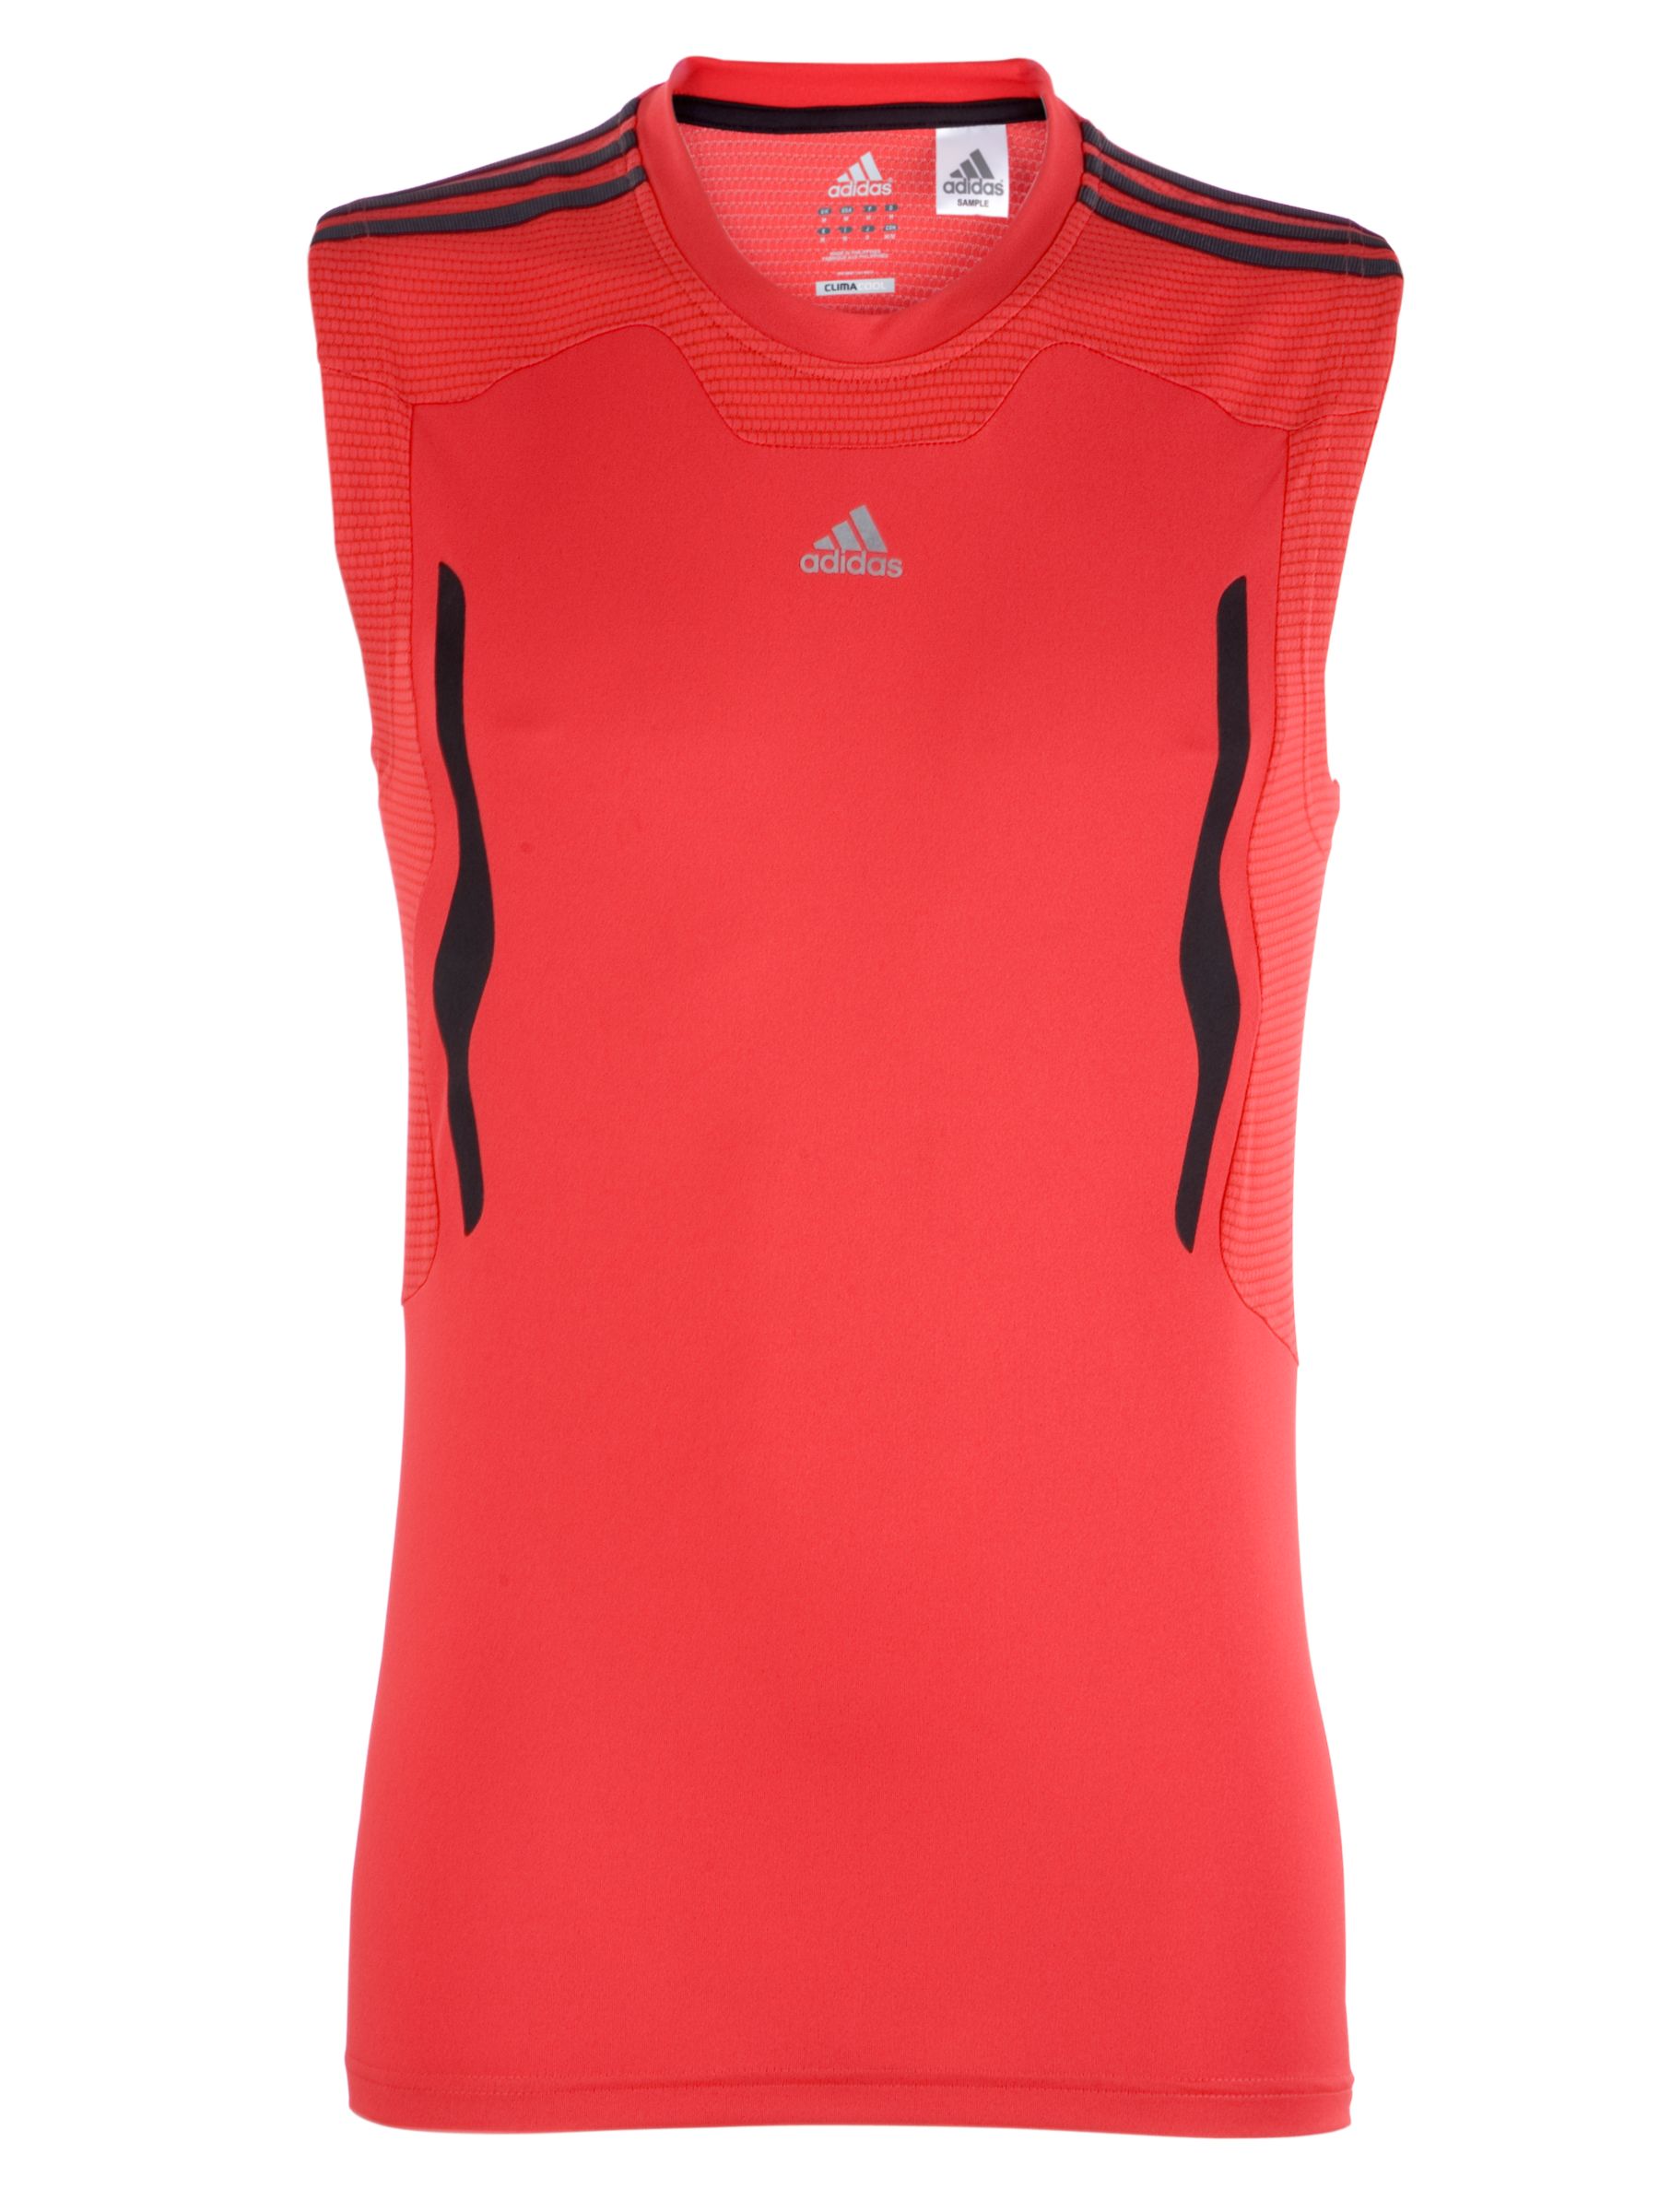 Adidas Clima 365 Sleeveless T-Shirt, Red